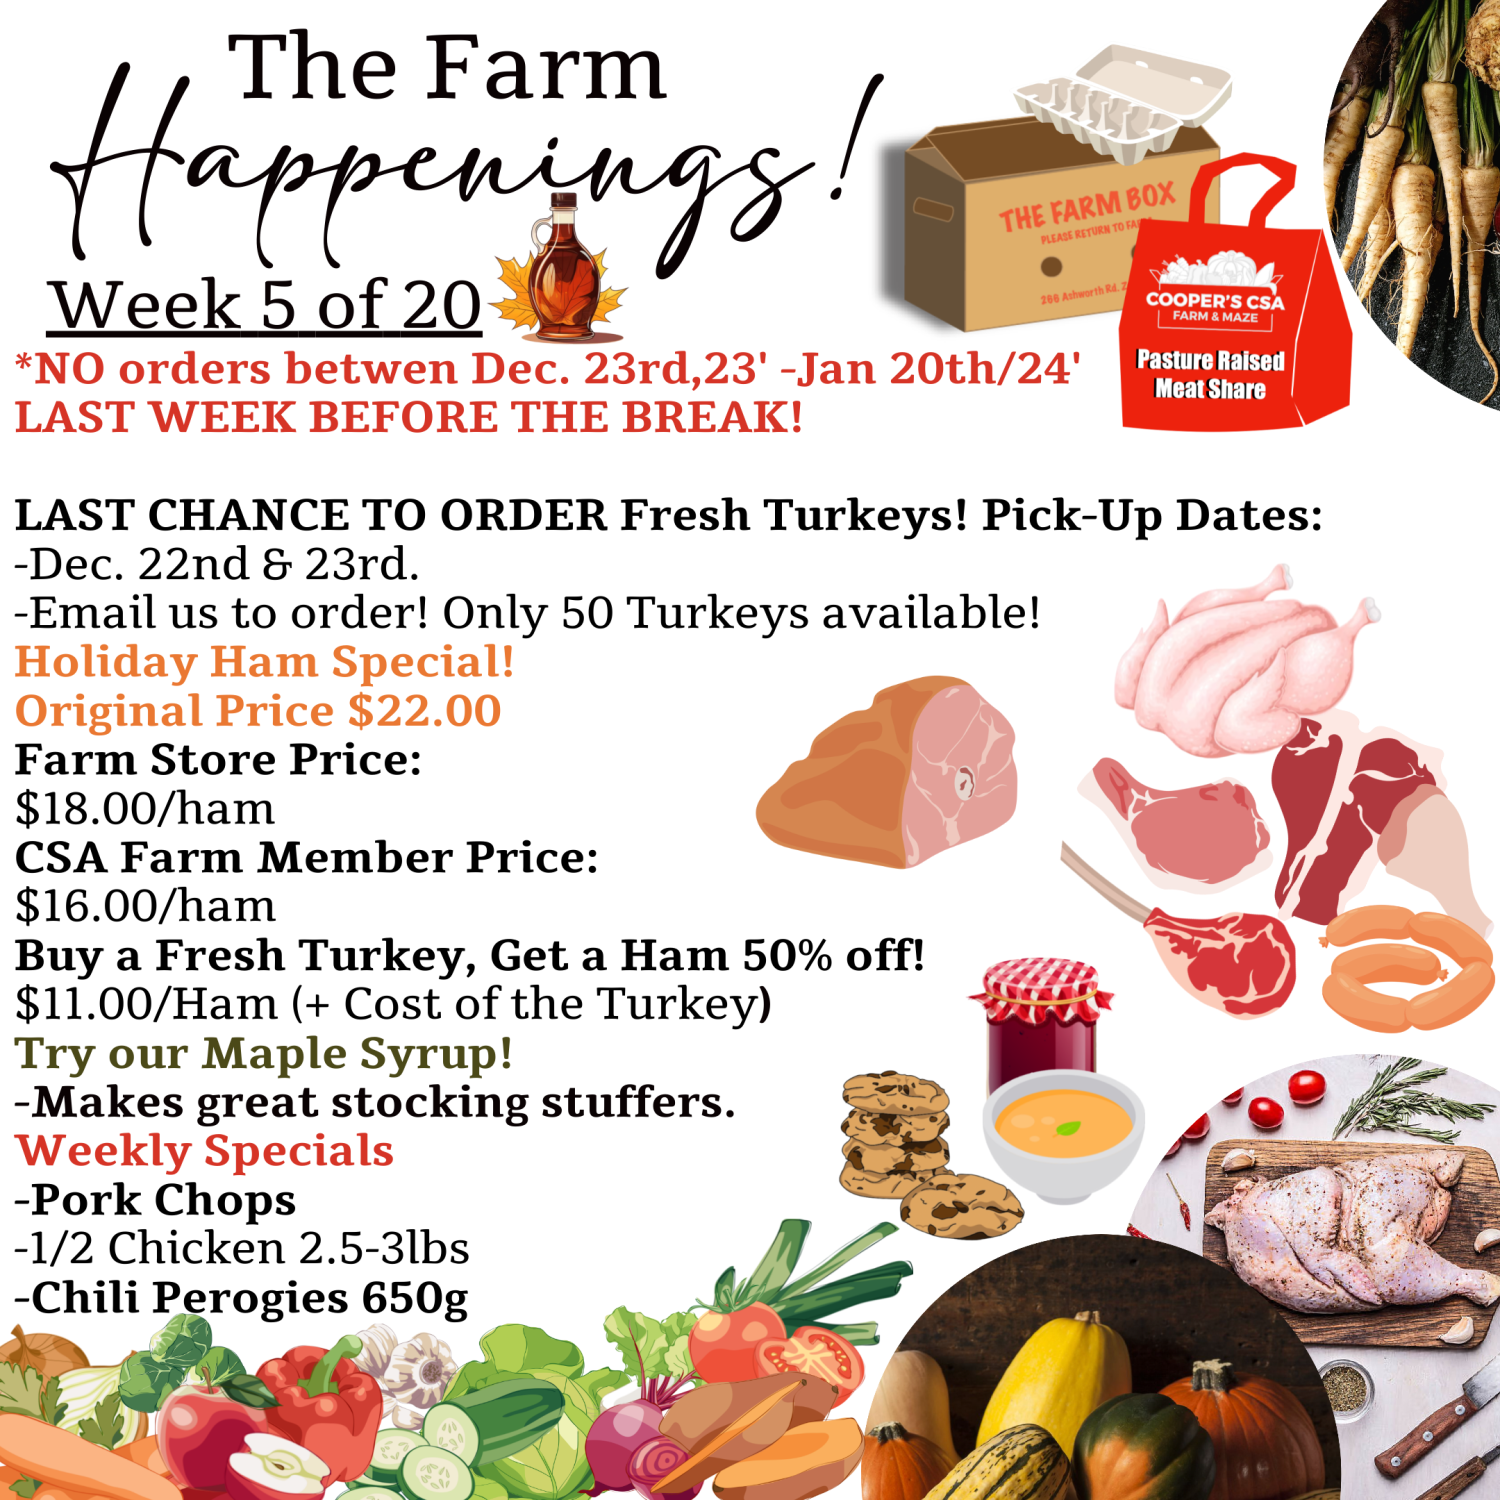 Previous Happening: "The Farm Box"-Coopers CSA Farm Farm Happenings Dec. 19th-23rd